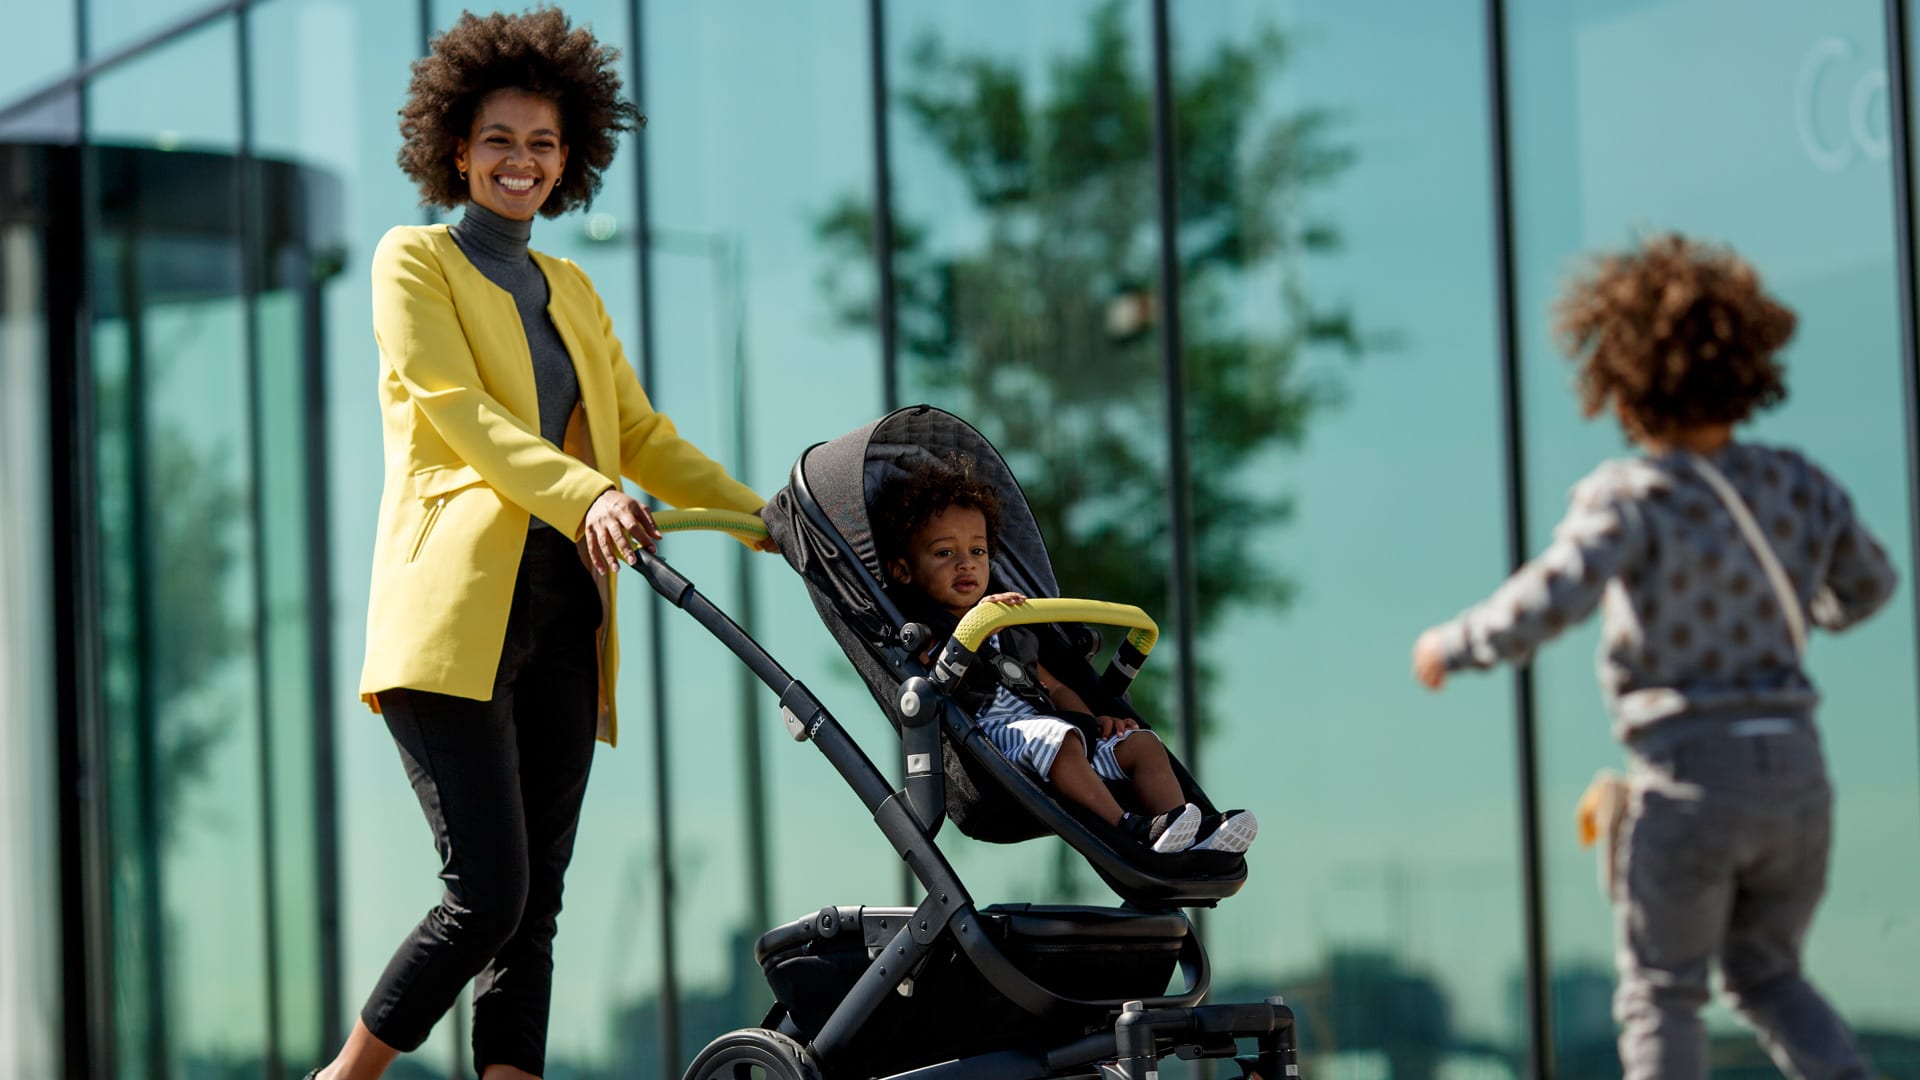 Meet the NikeID of baby strollers